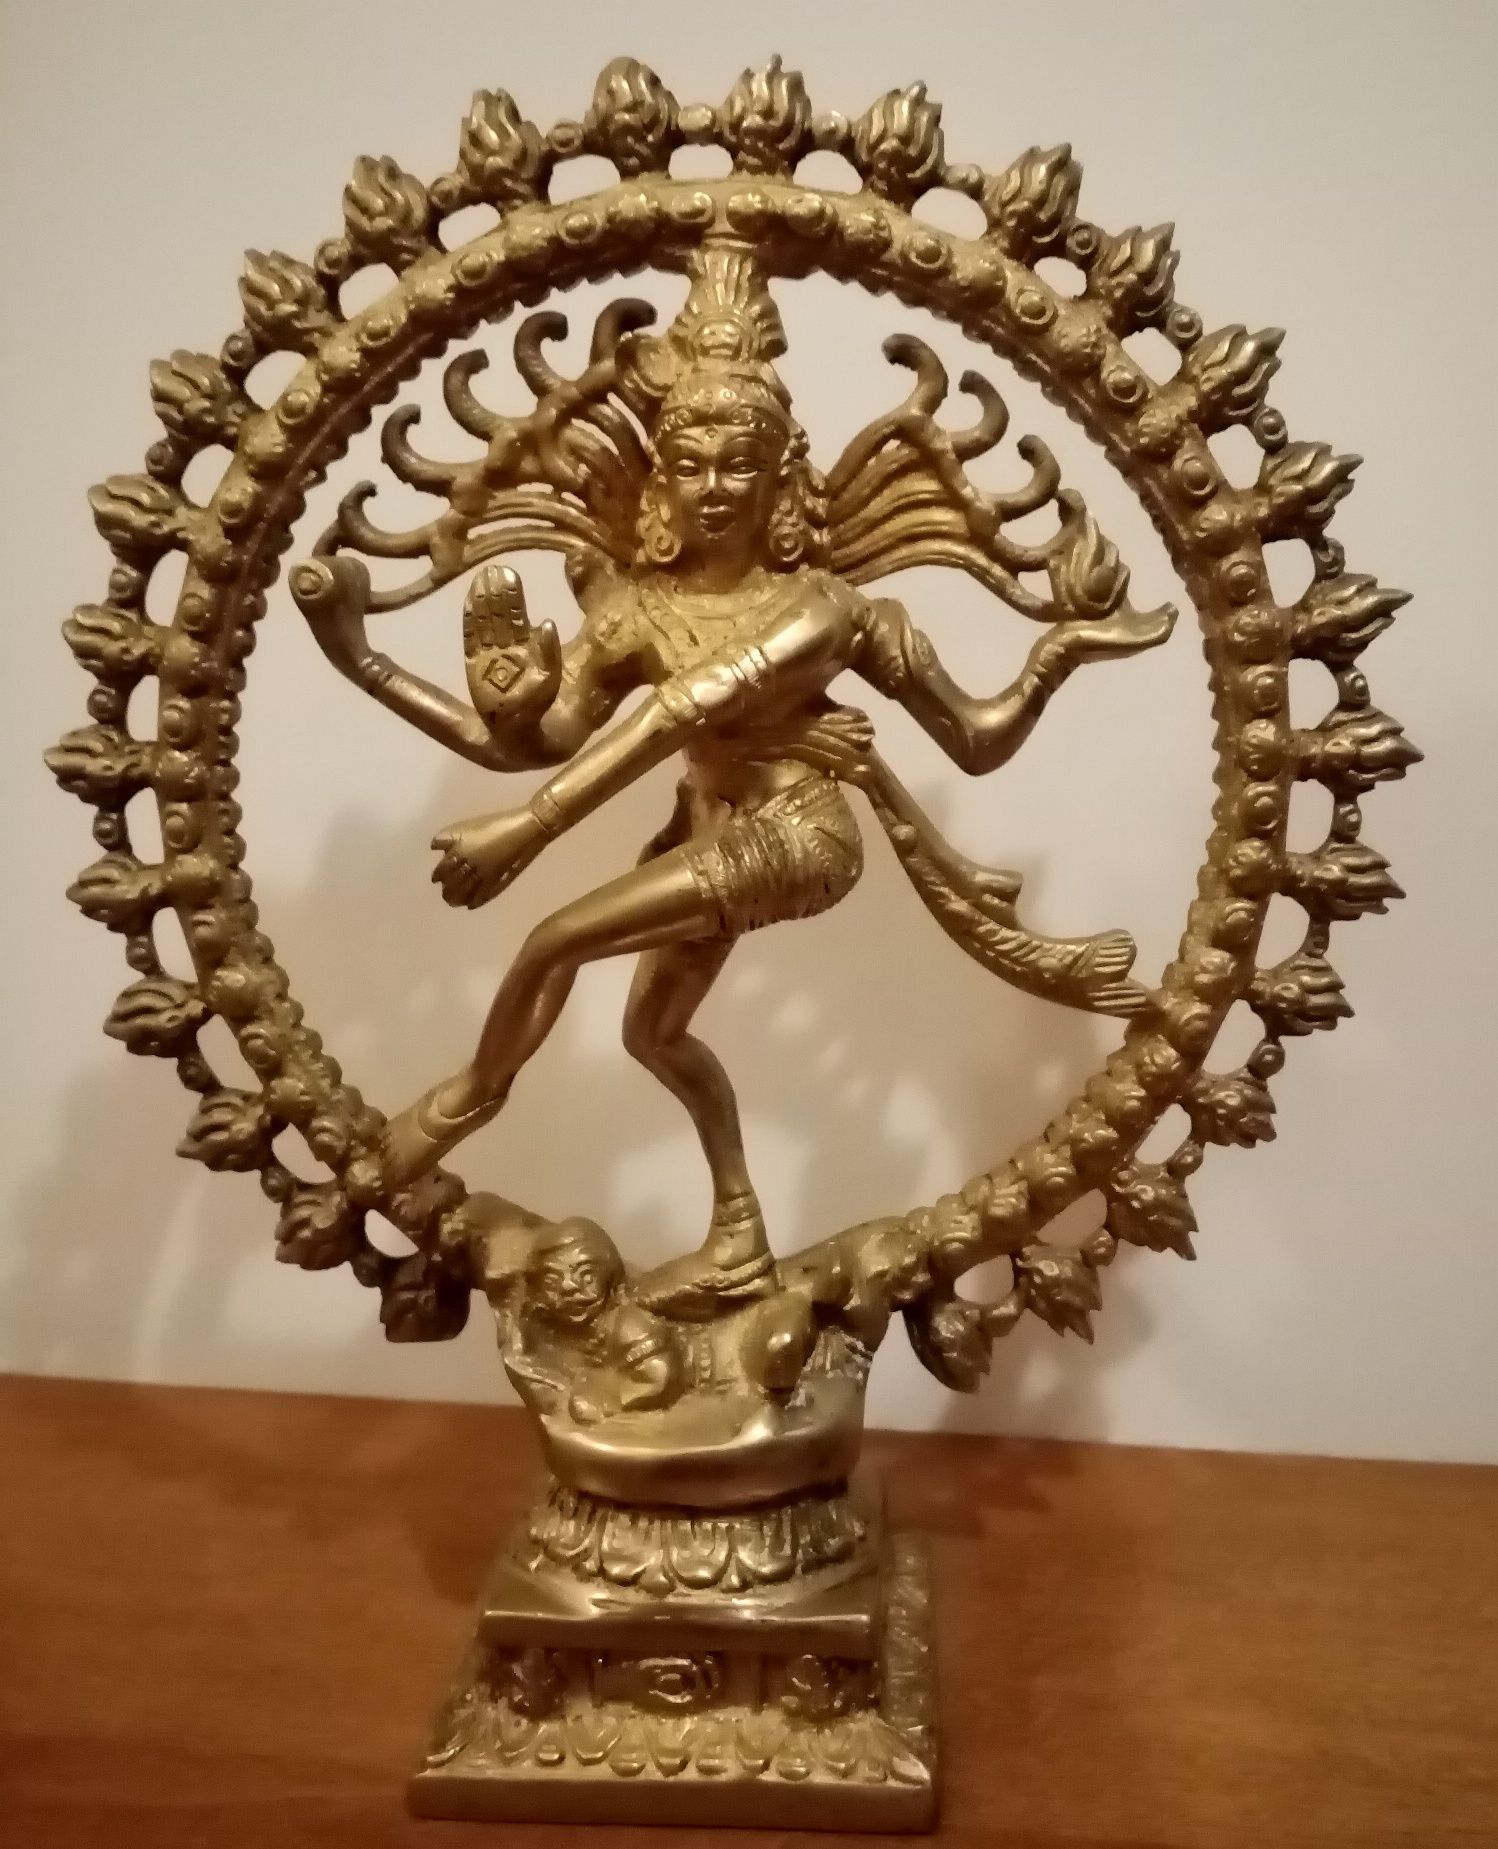 Statueta ce o infatiseaza pe zeita "Shiva" realizata din bronz masiv.